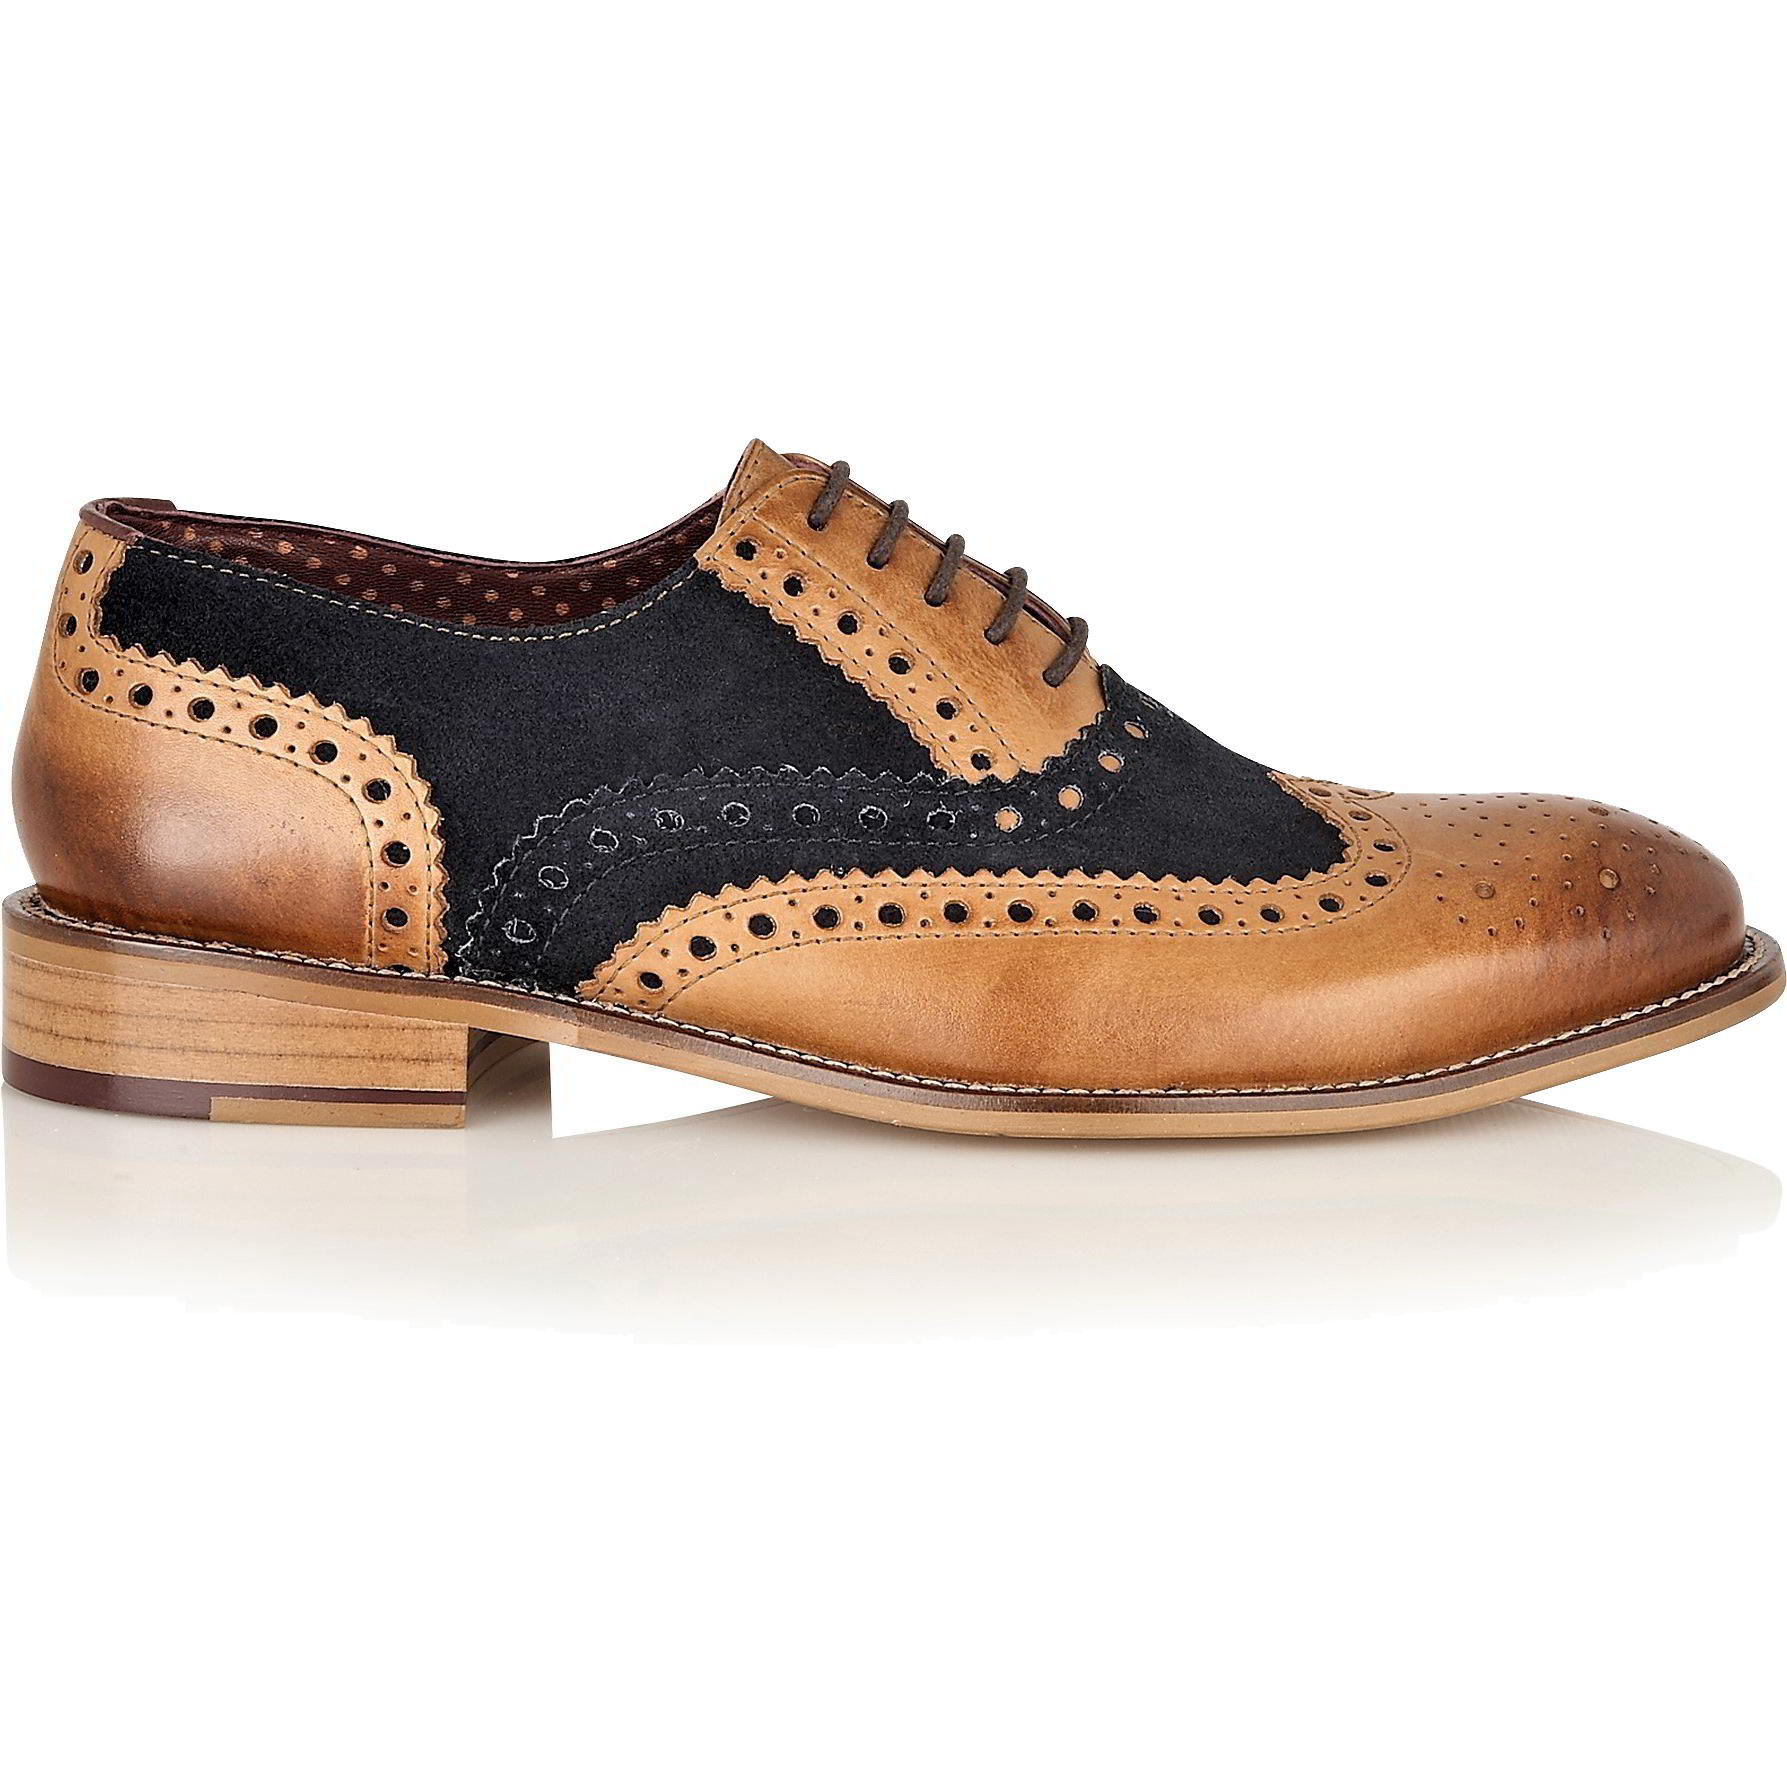 London Brogues Men's Gatsby Leather Wingtip Brogue Shoes - UK 10